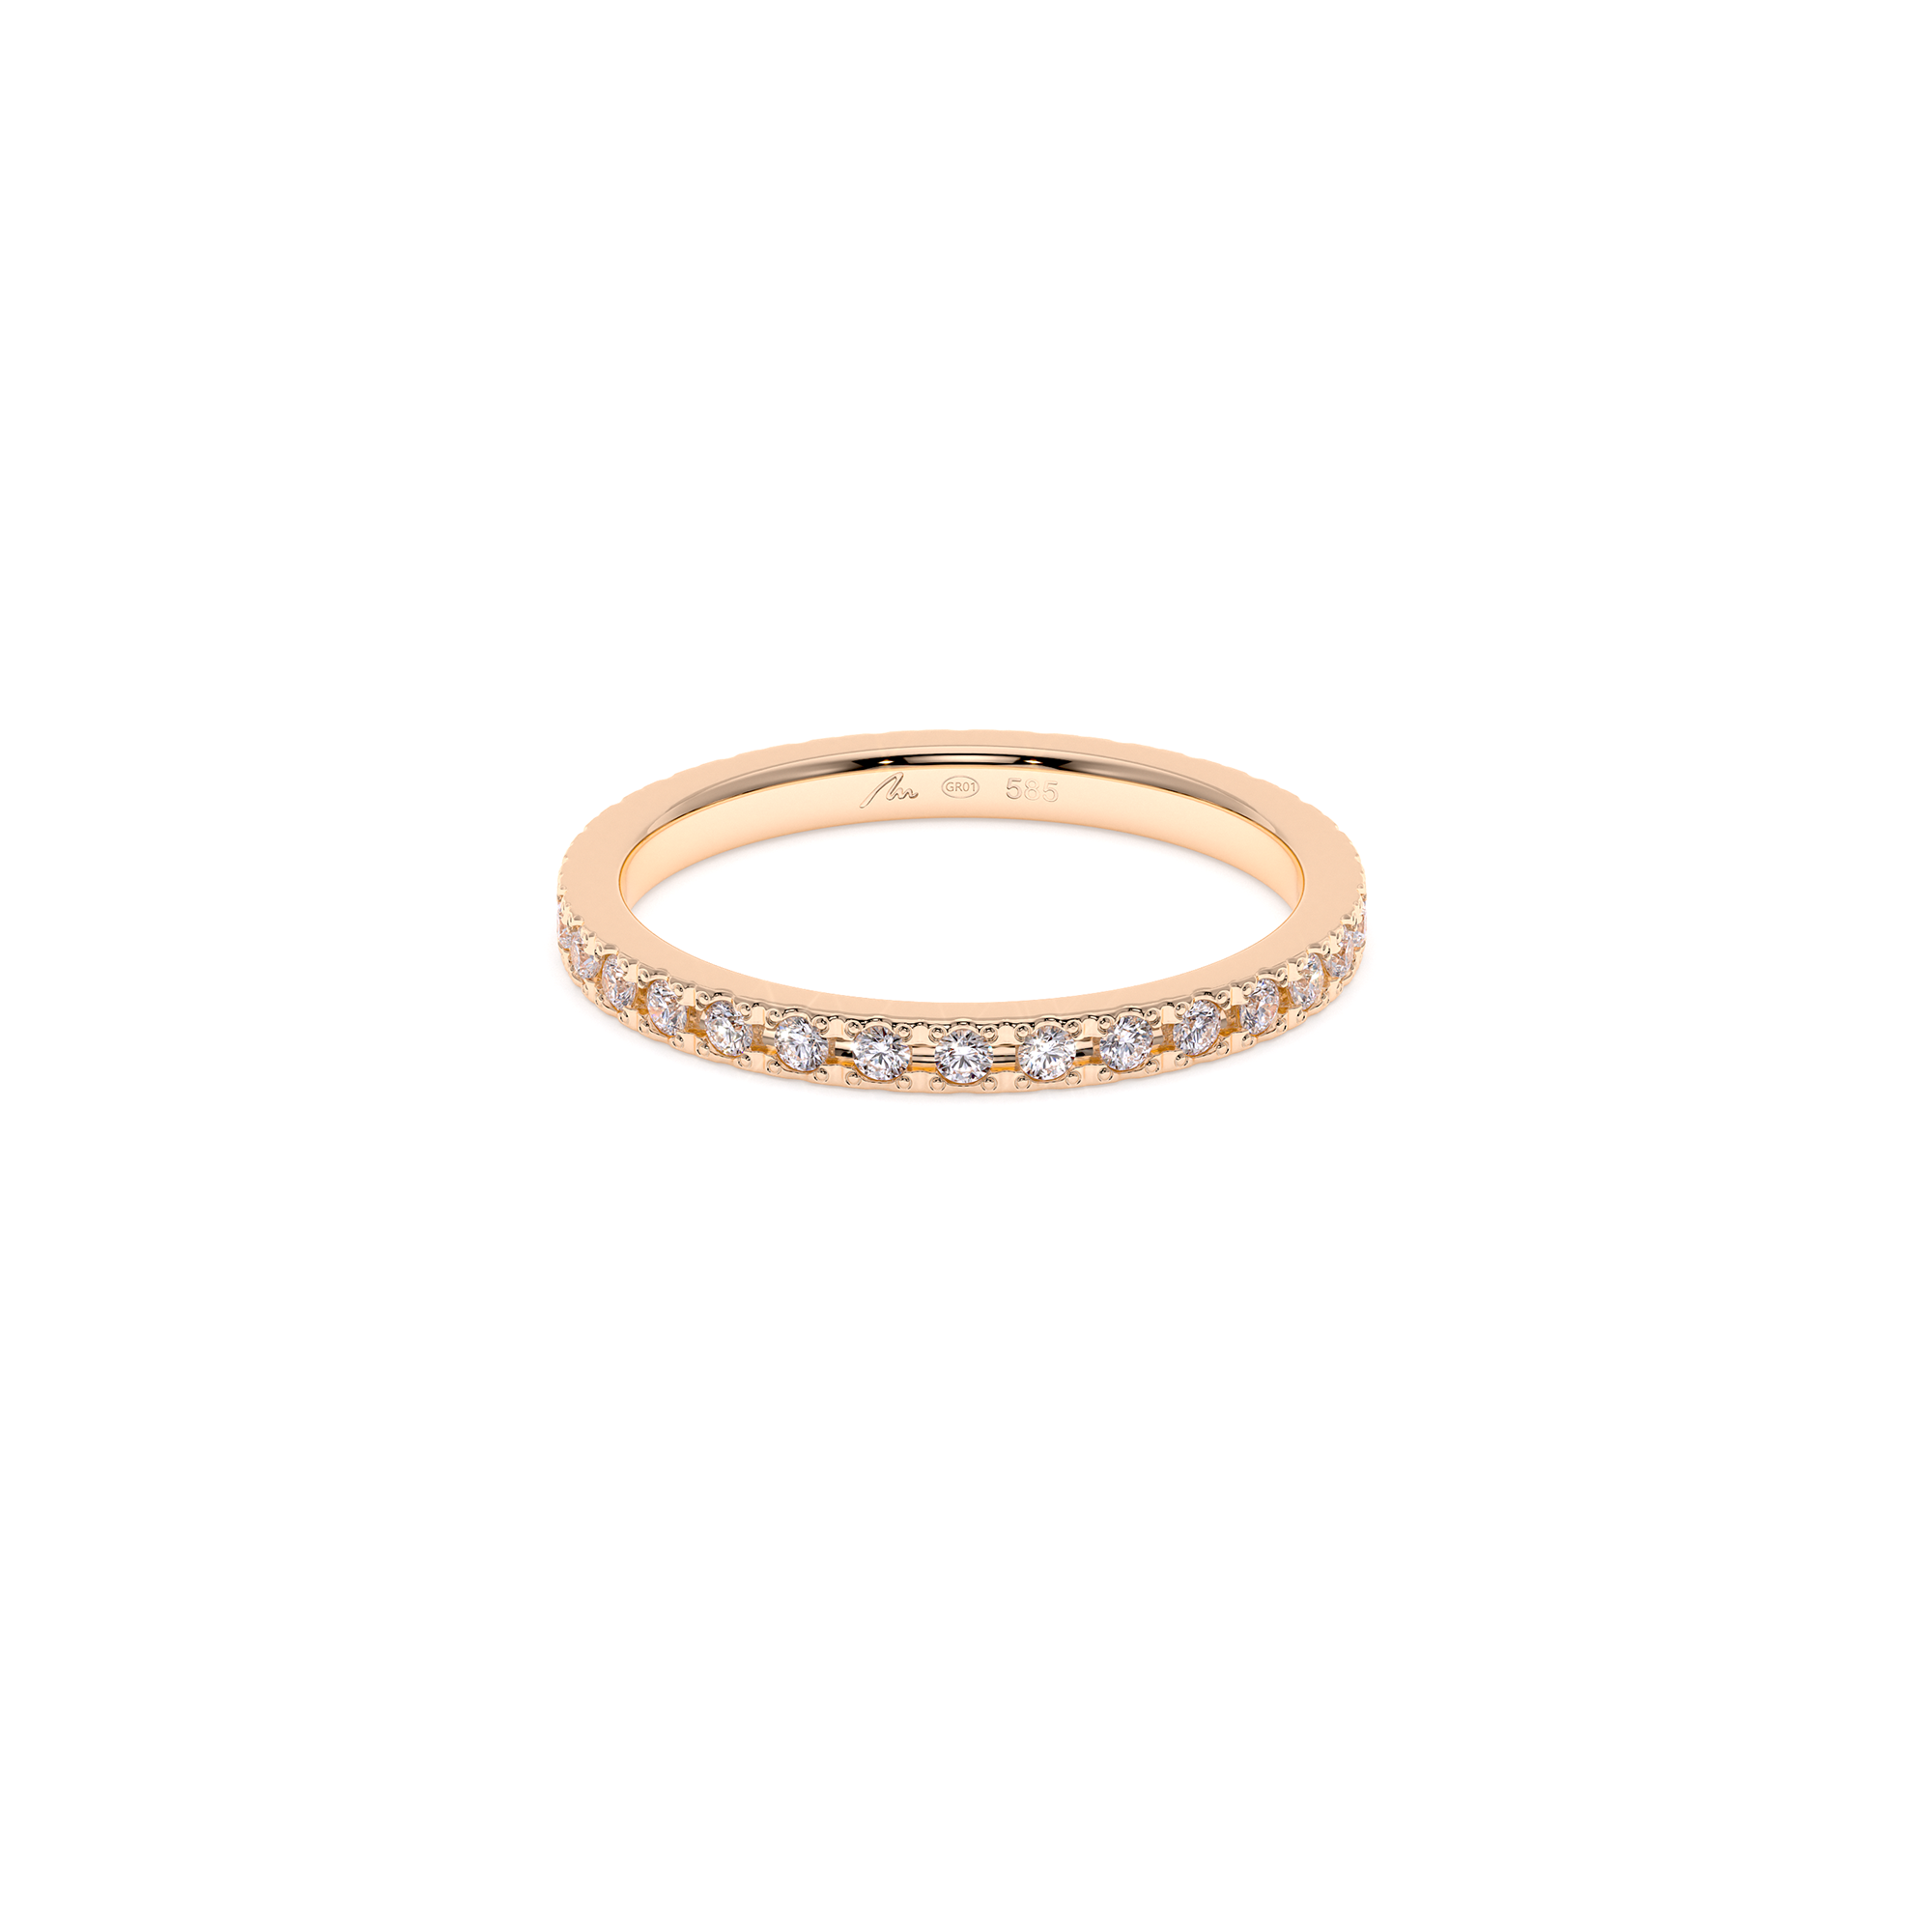 14 k rose gold Tennis ring with 0.45 CT white diamonds